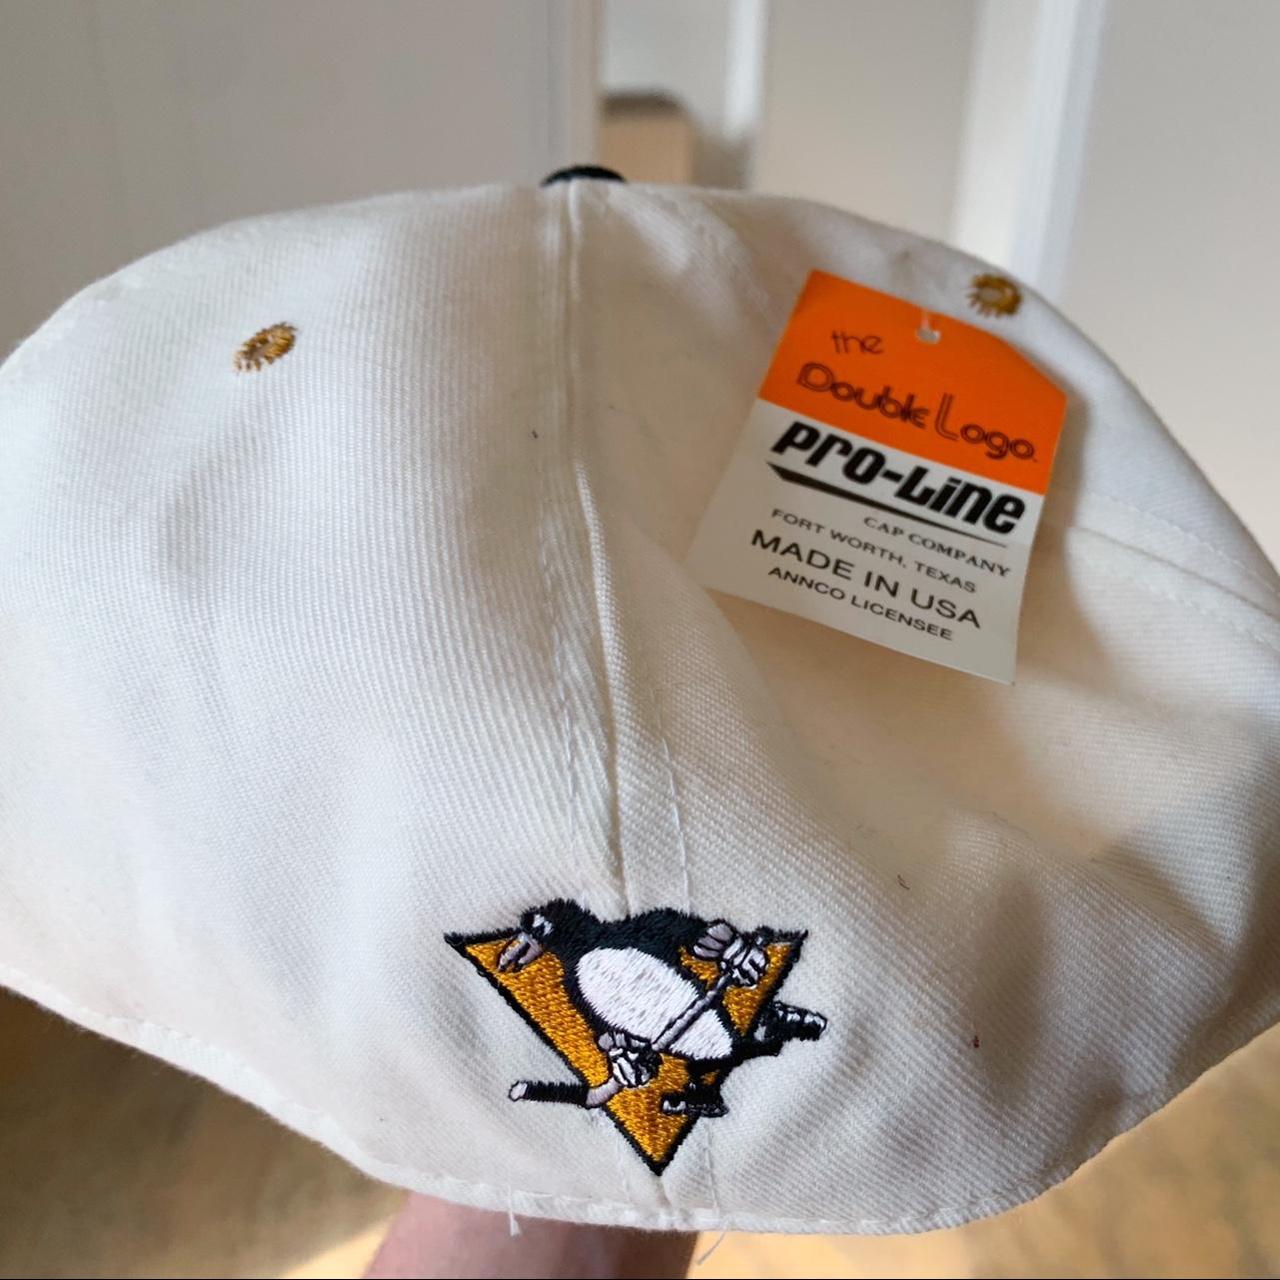 Vintage 90s ANNCO Pittsburgh Penguins Snapback Cap Hat